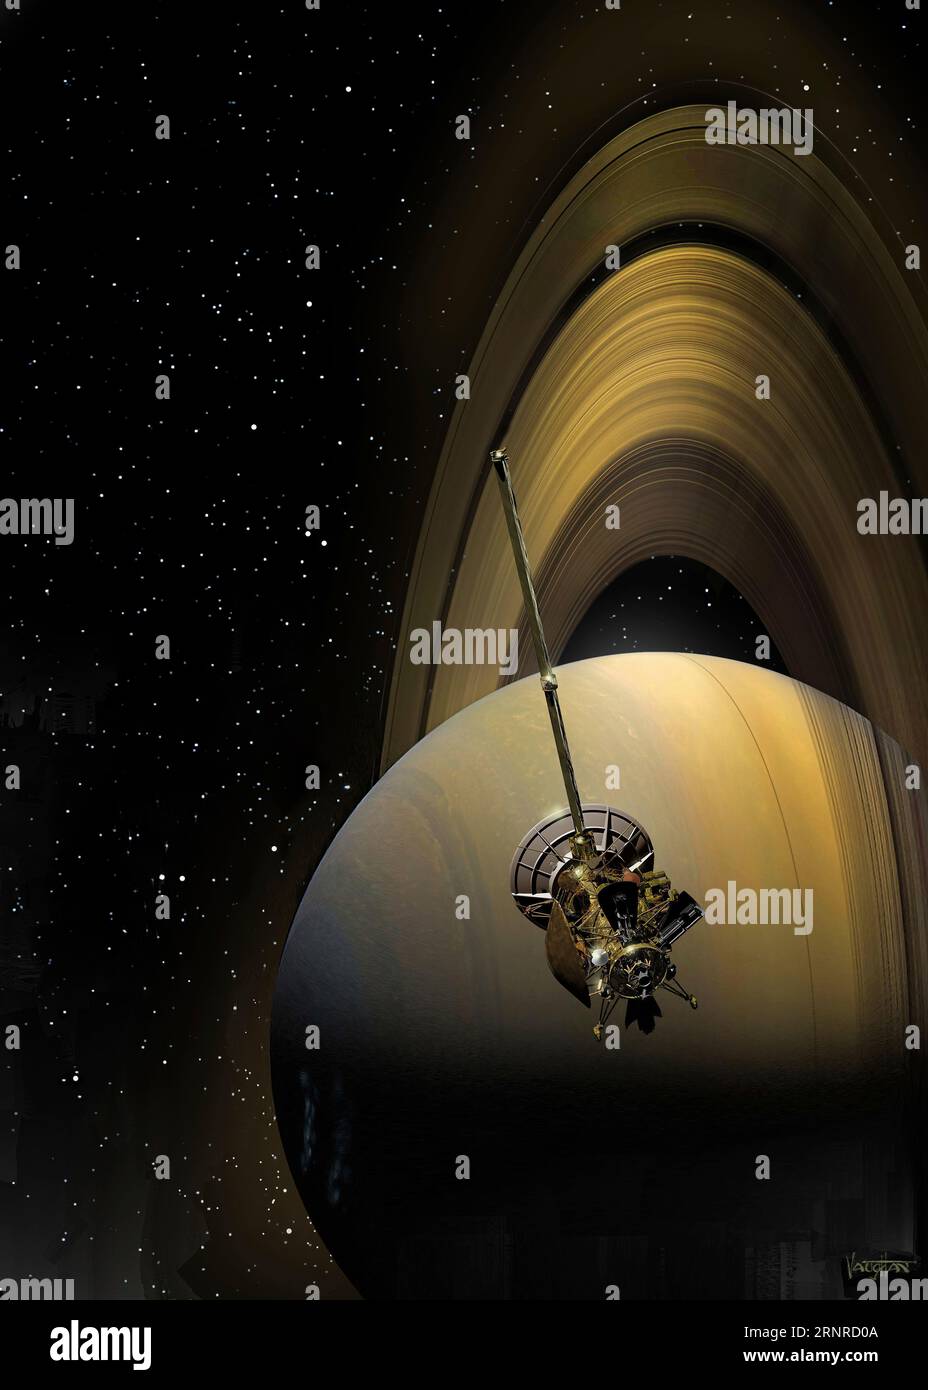 Cassini-Huygens probe approaching Saturn, illustration Stock Photo